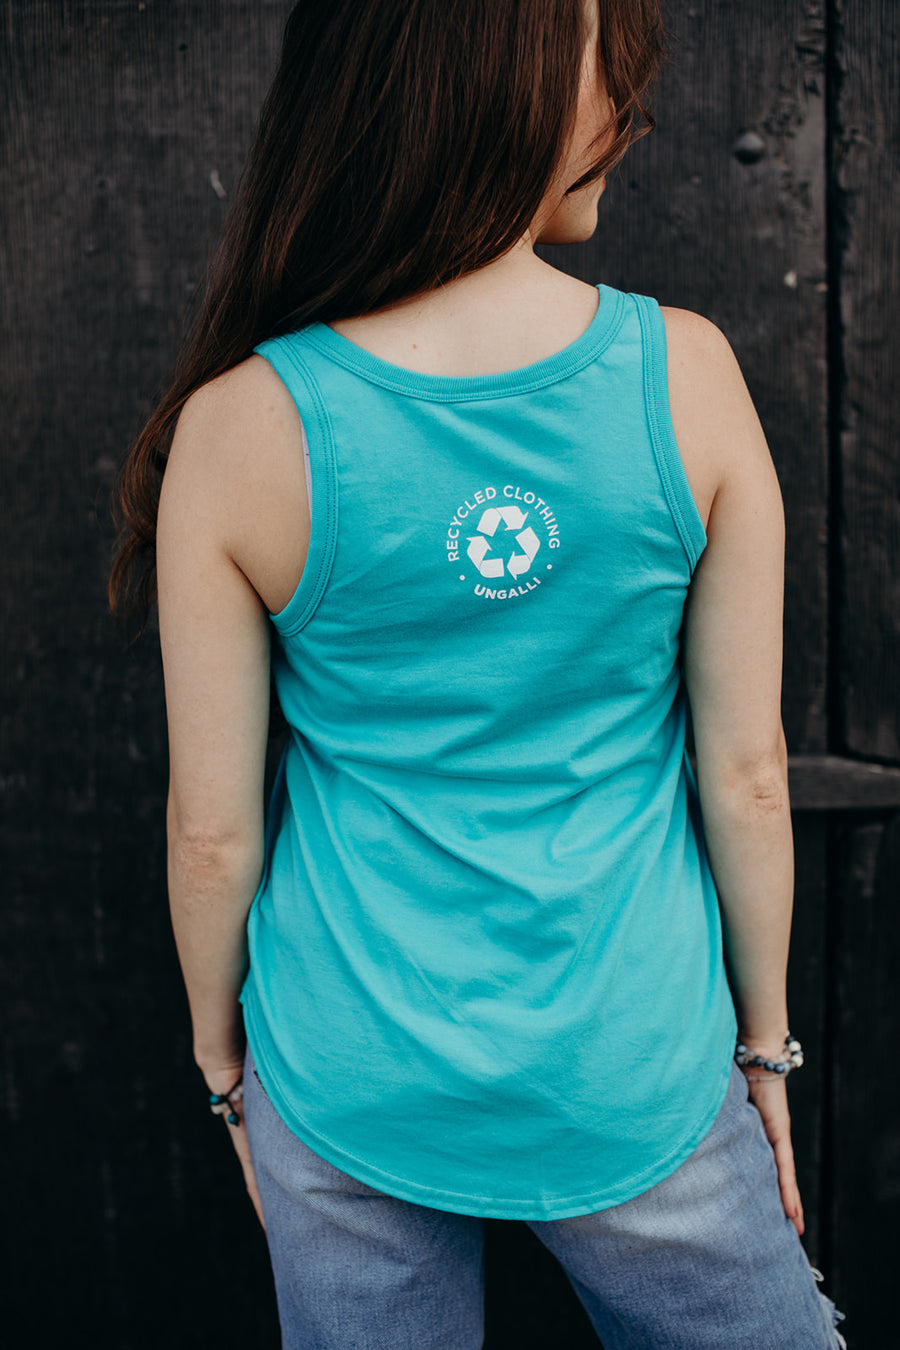 Women's organic teal tank top with white 'adventure club' logo